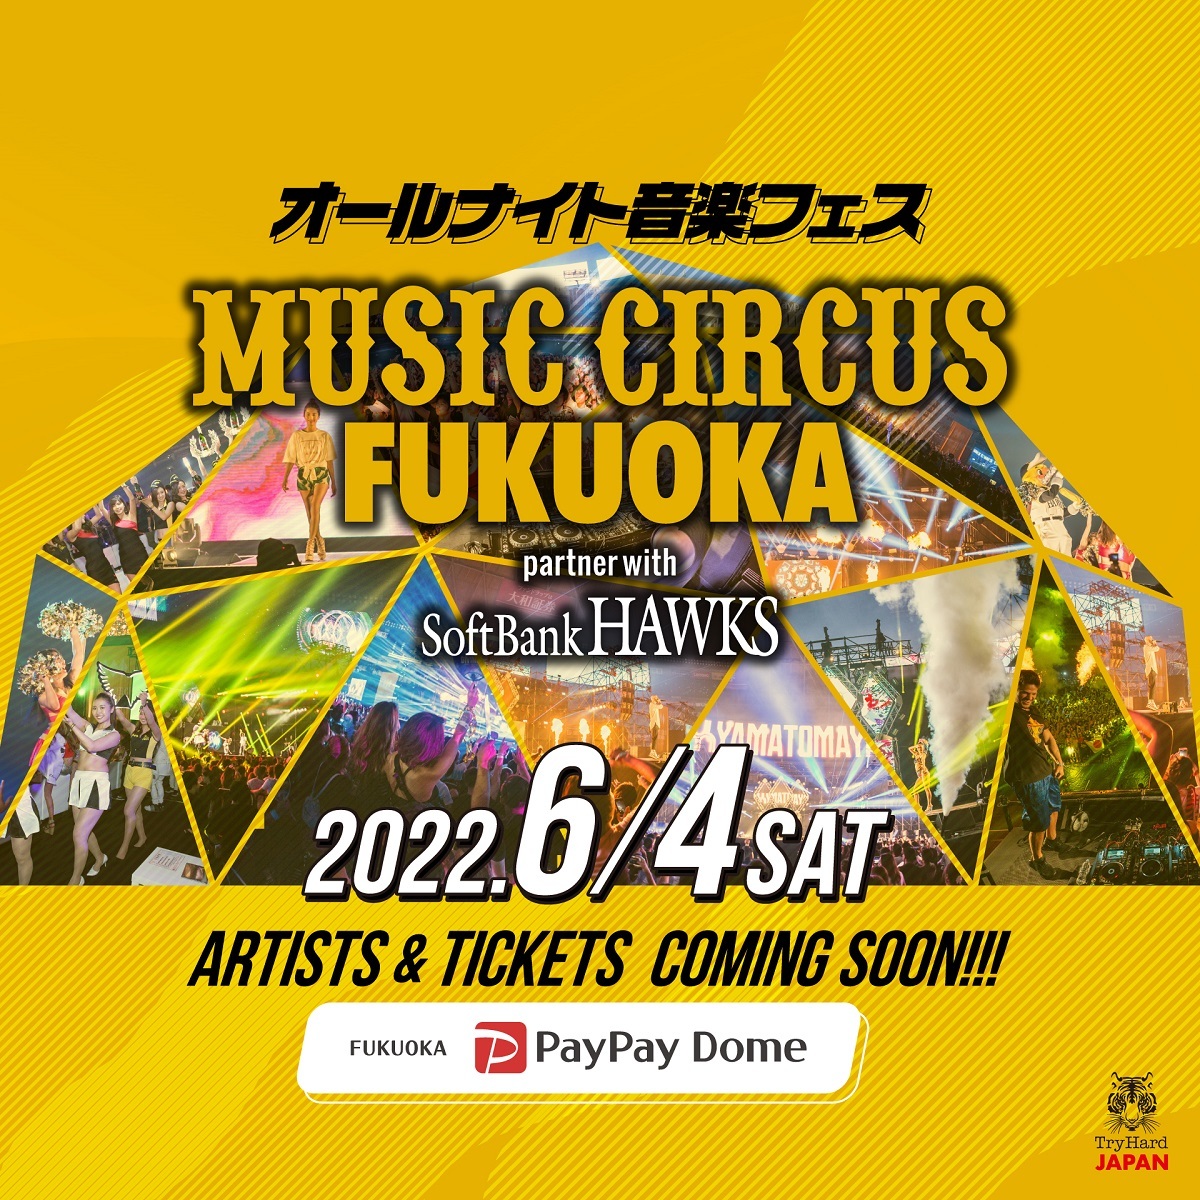 MUSIC CIRCUS FUKUOKA partner with SoftBankHAWKS